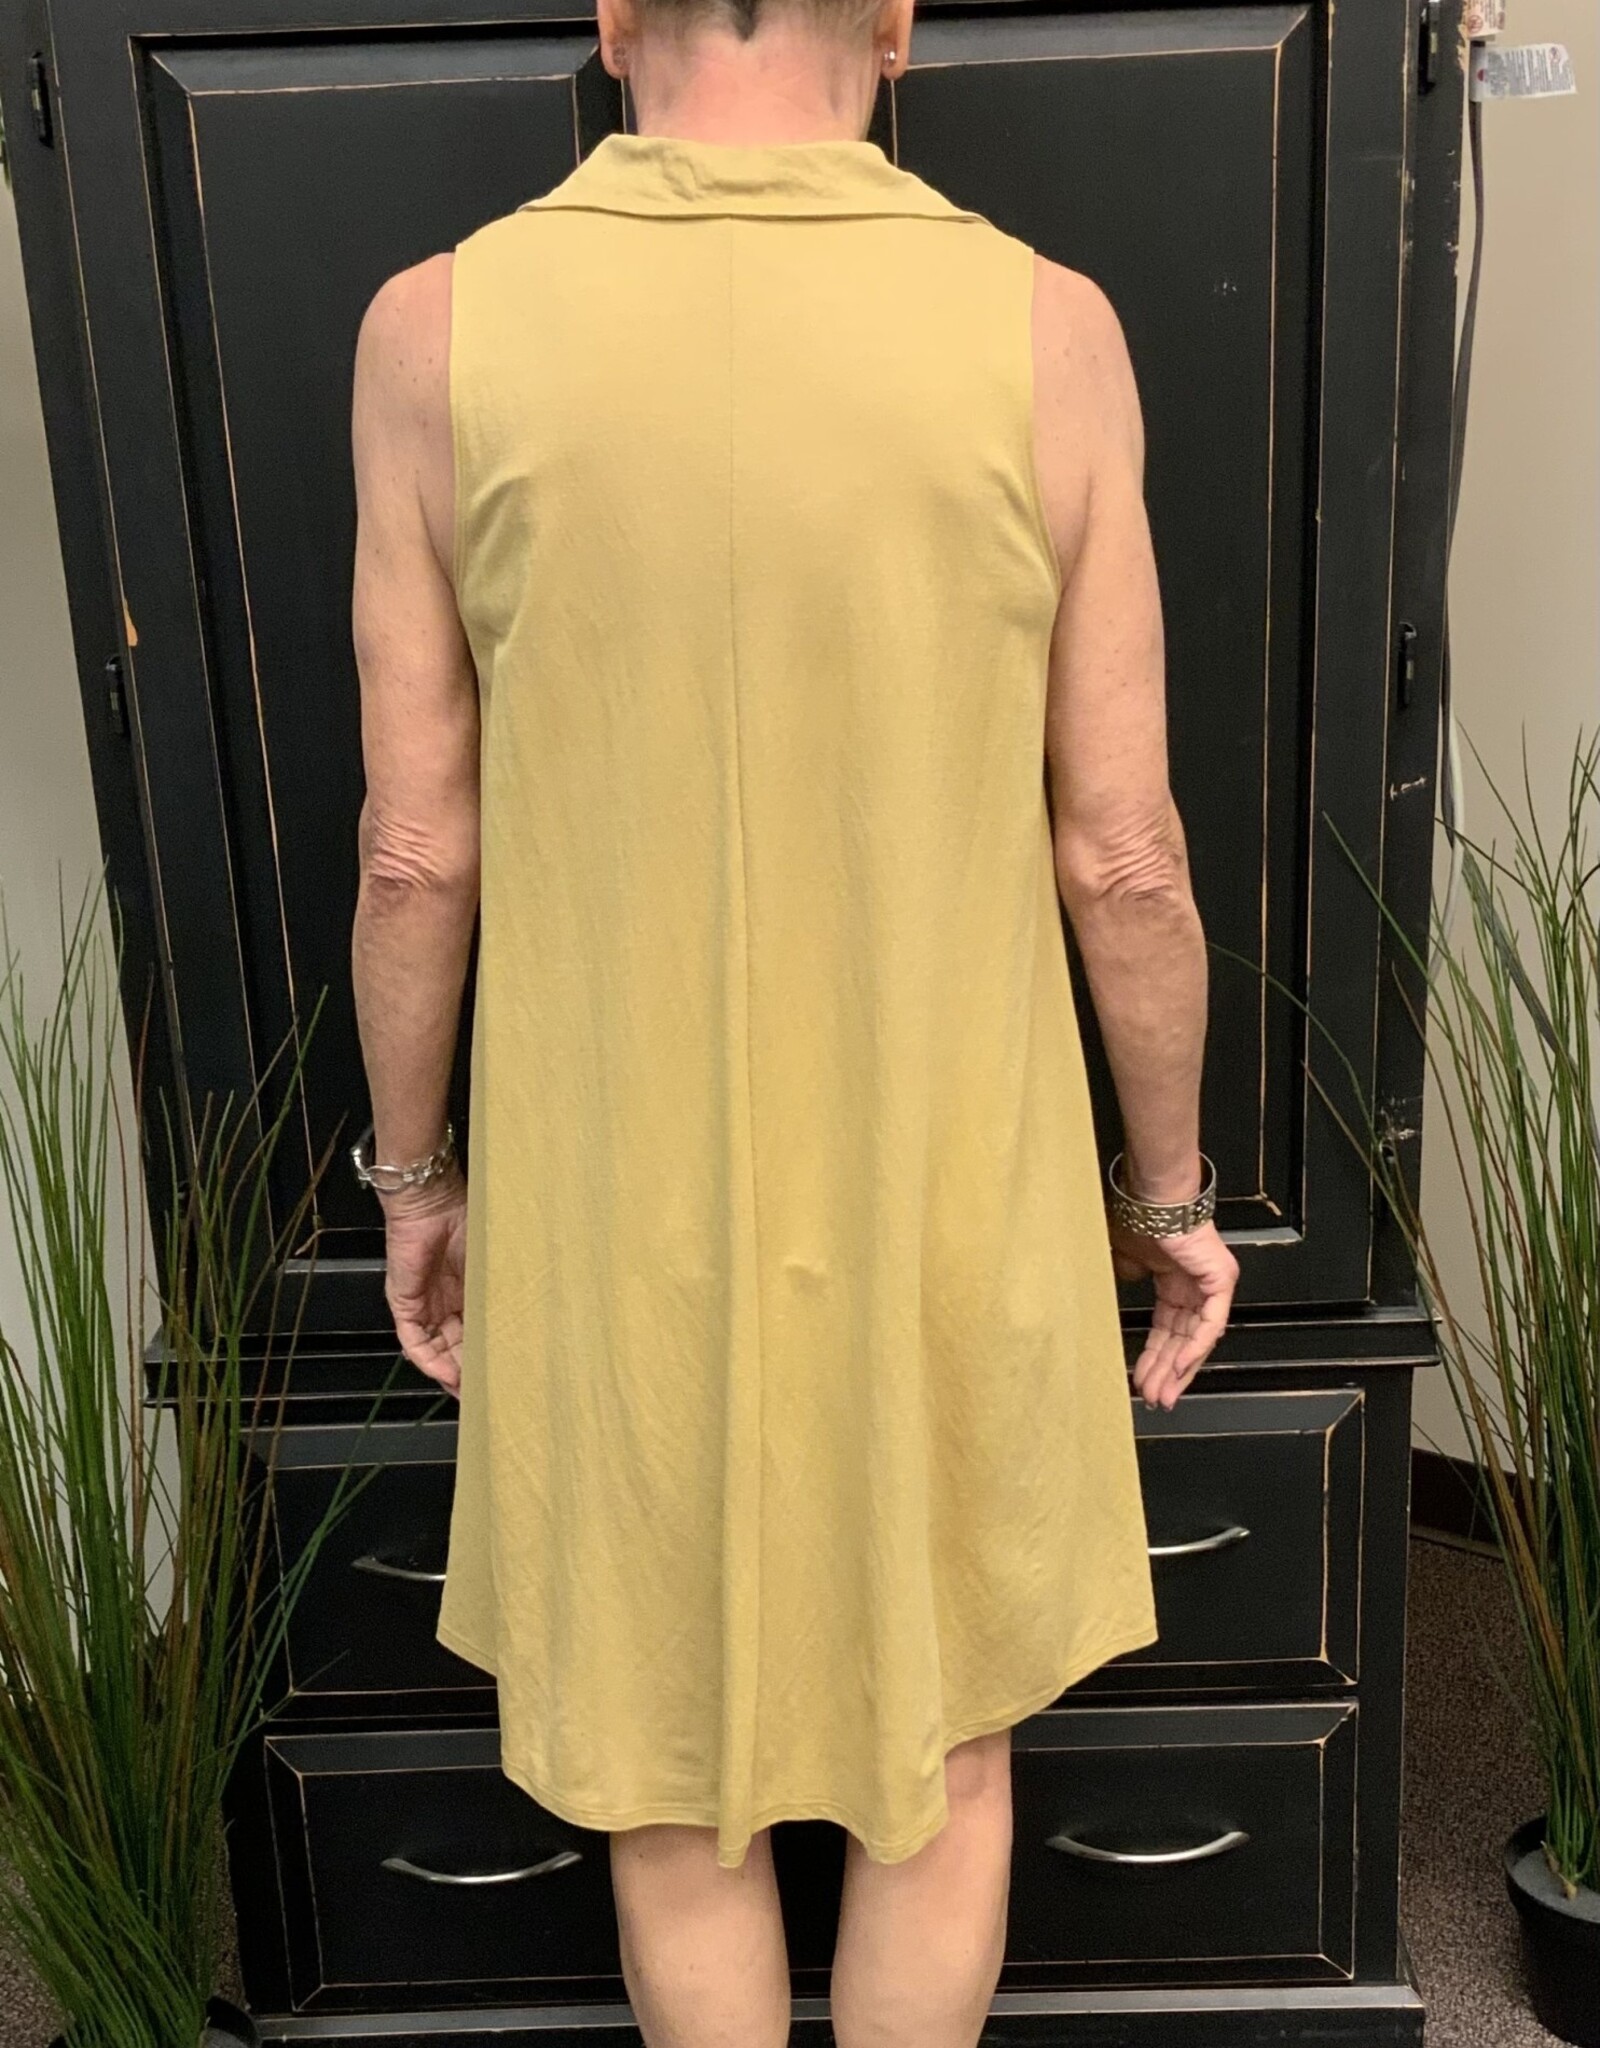 - Mustard Collared V-Neck Sleeveless Mid Length Dress